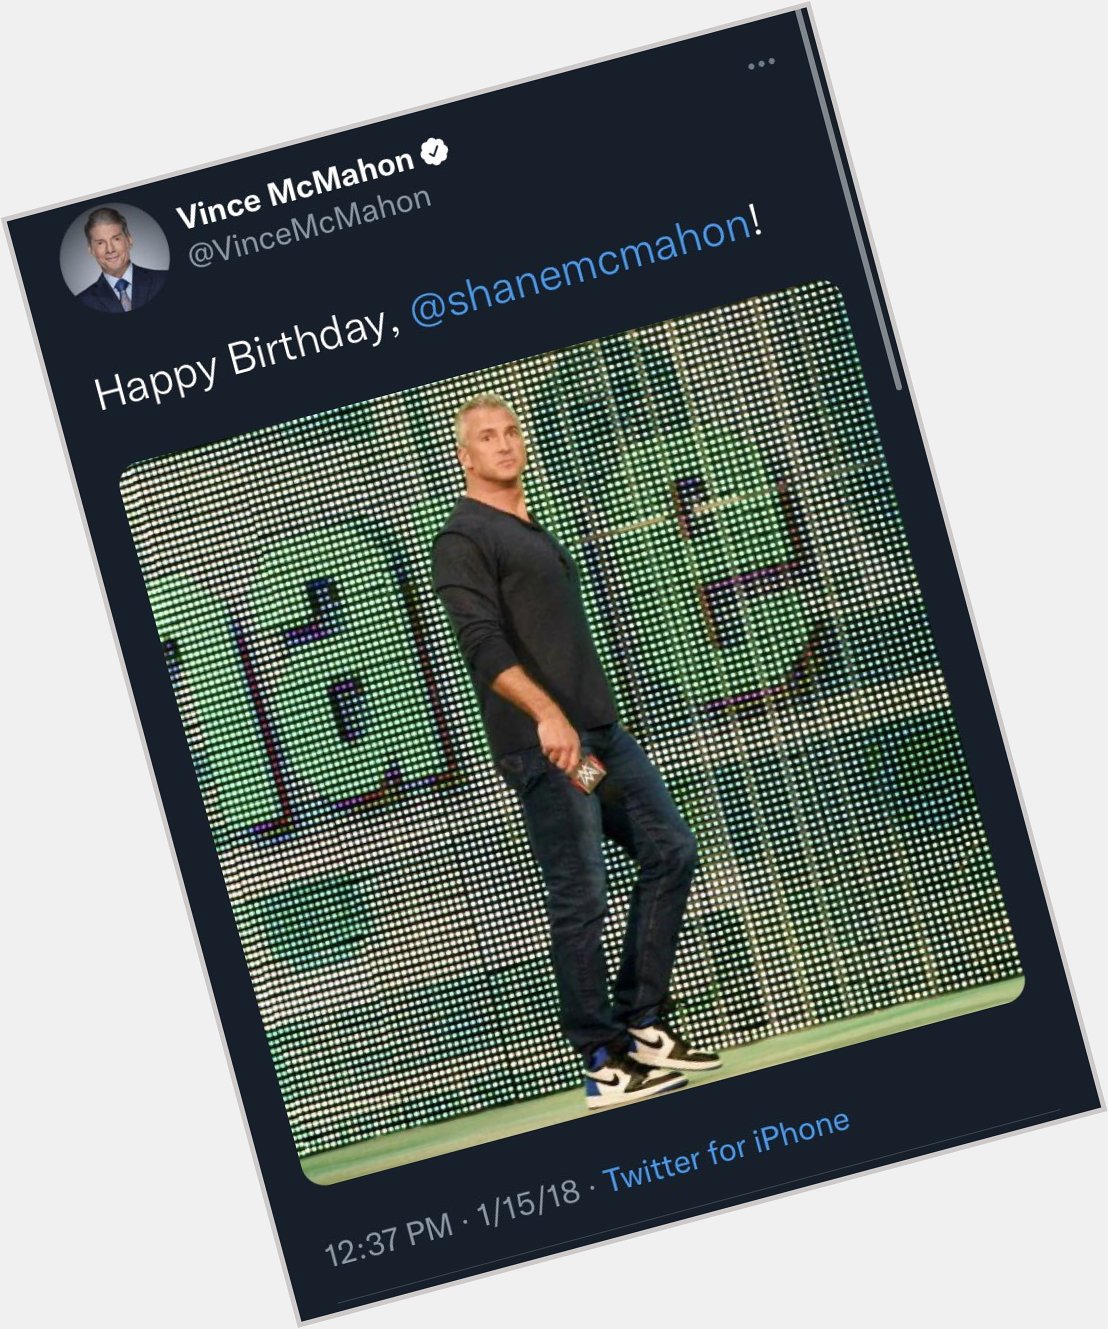 Happy birthday Shane McMahon 